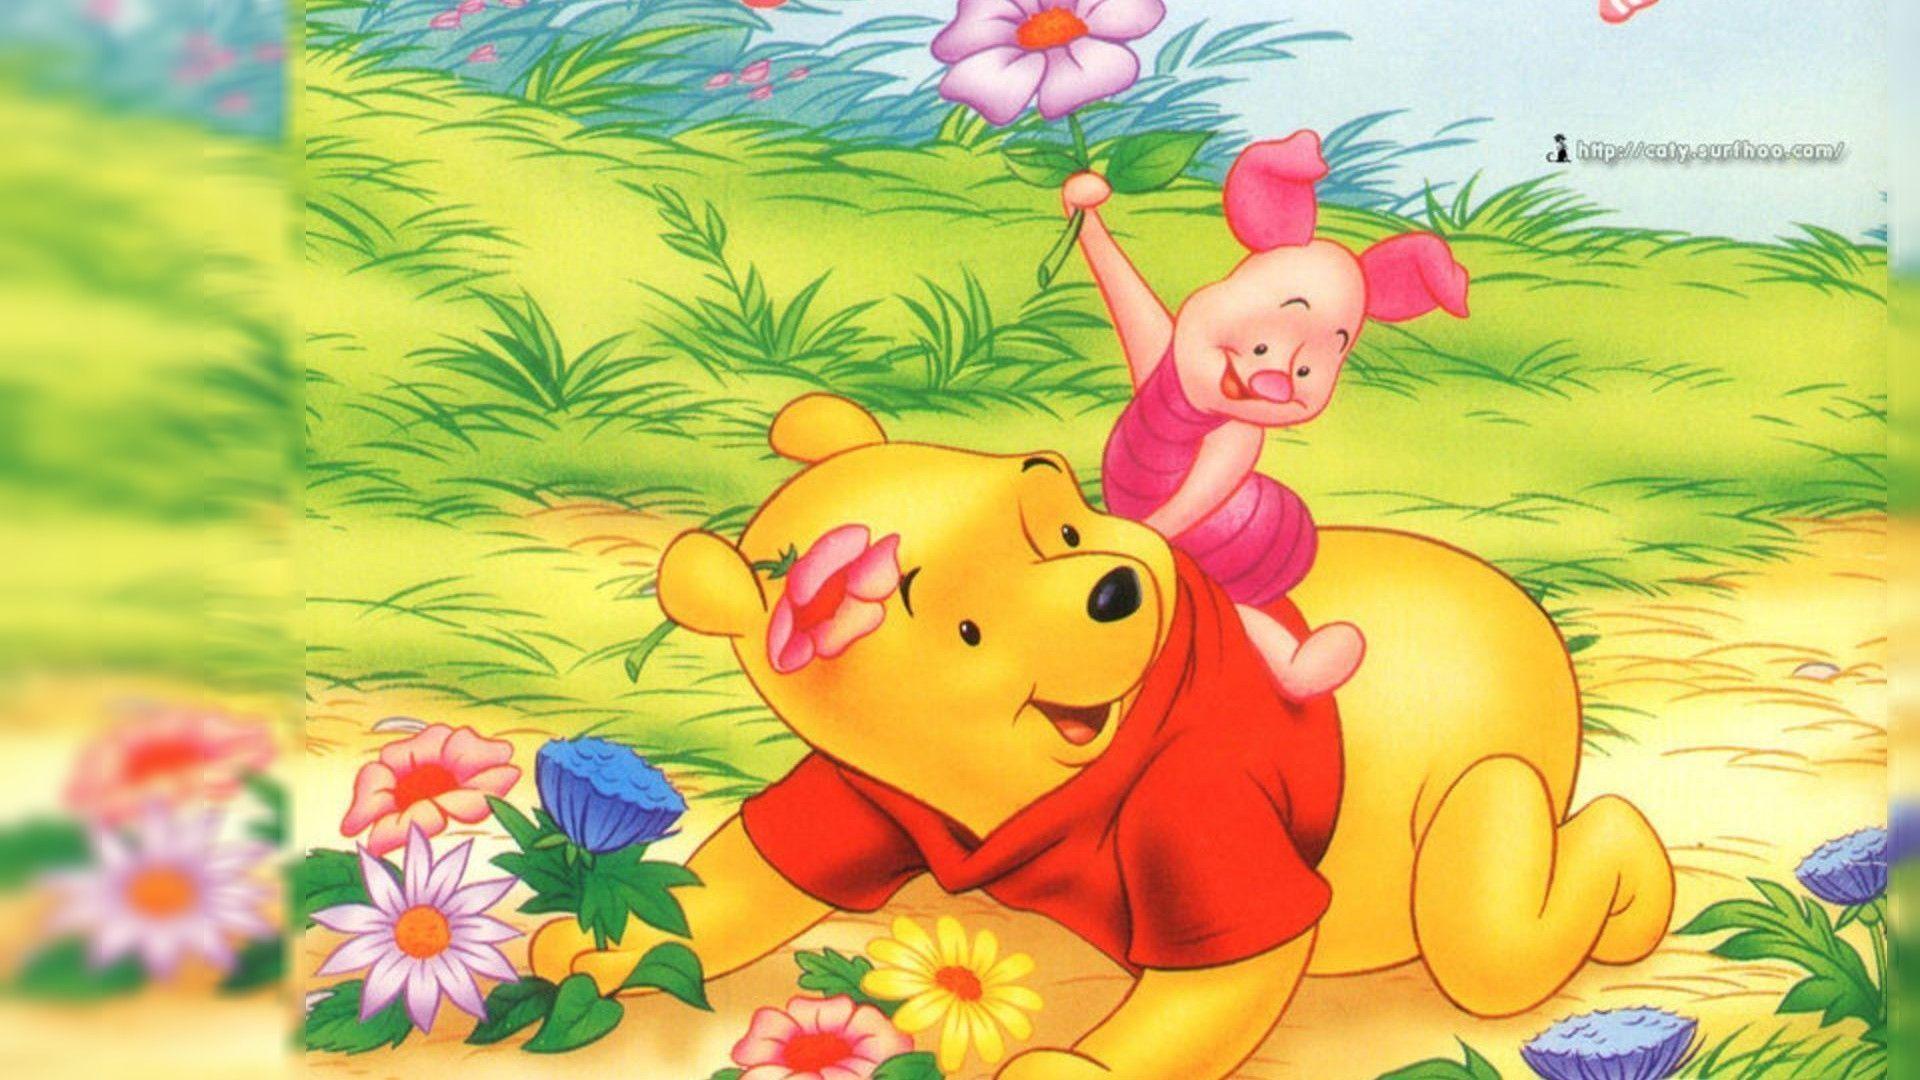 Wallpaper For > Winnie The Pooh Wallpaper For Desktop